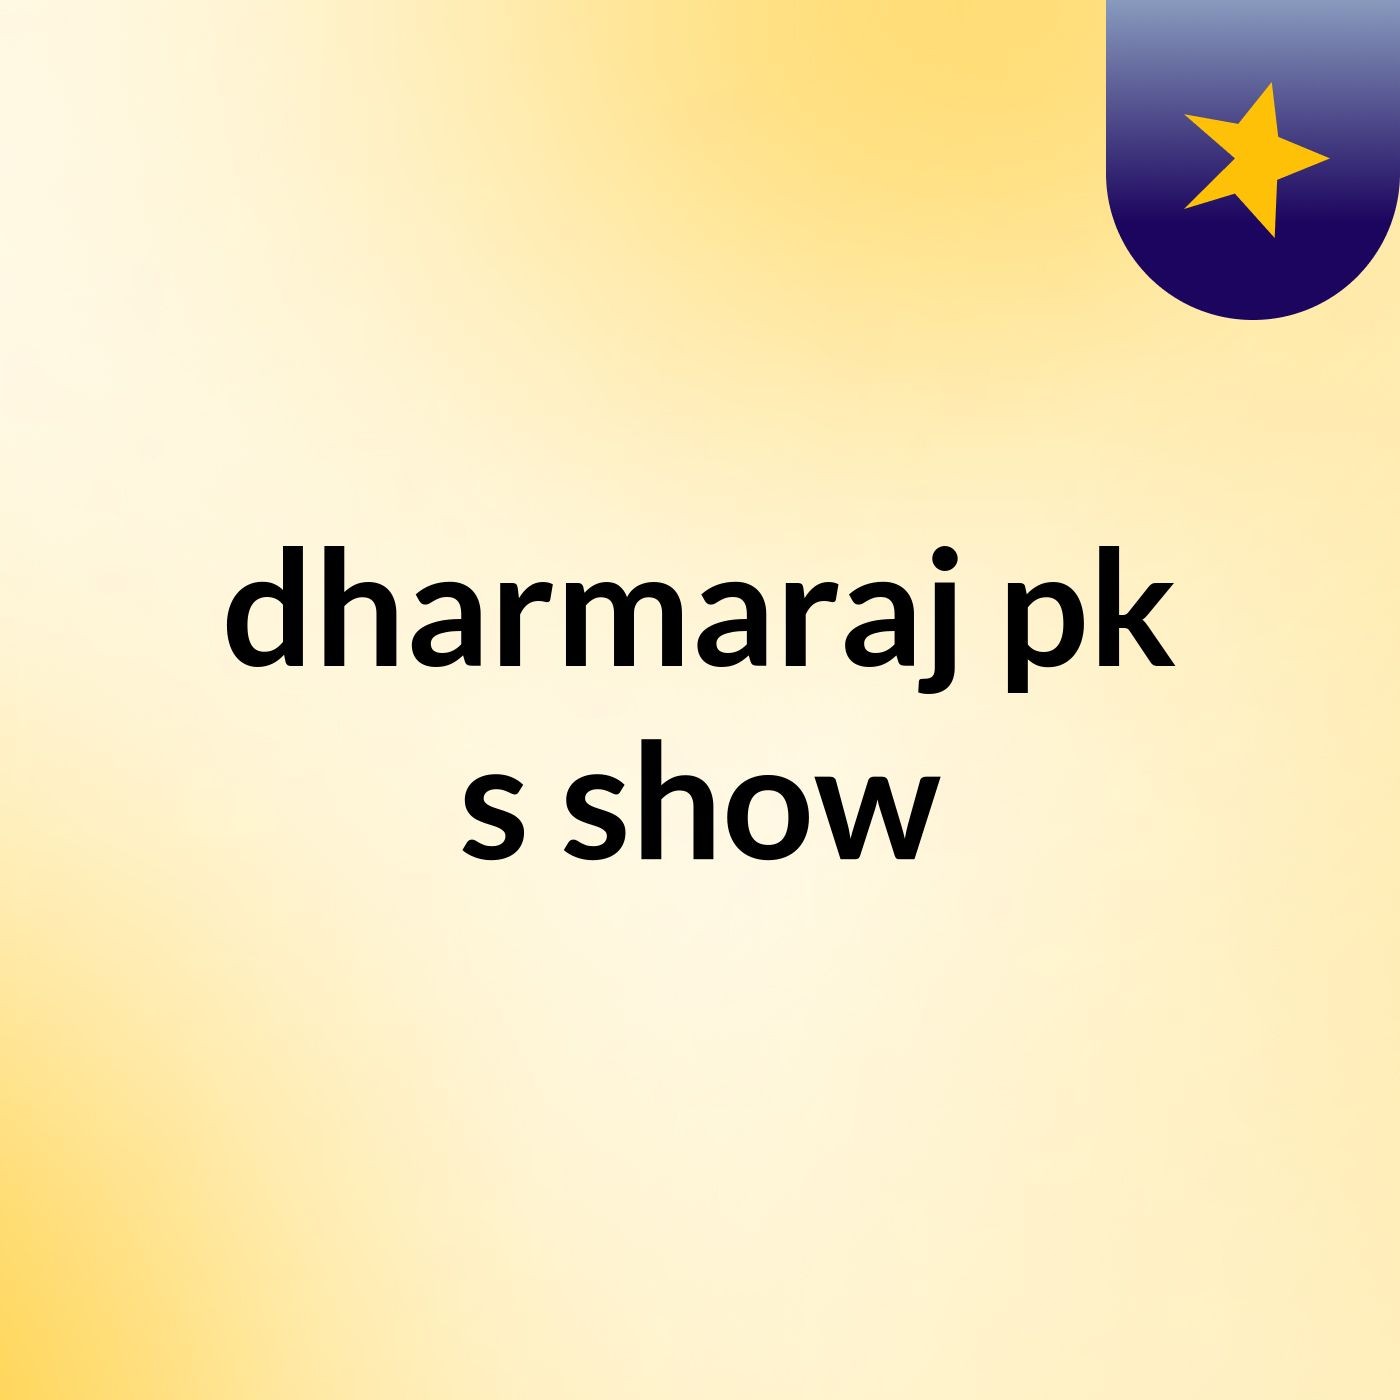 Episode 4 - dharmaraj pk's show